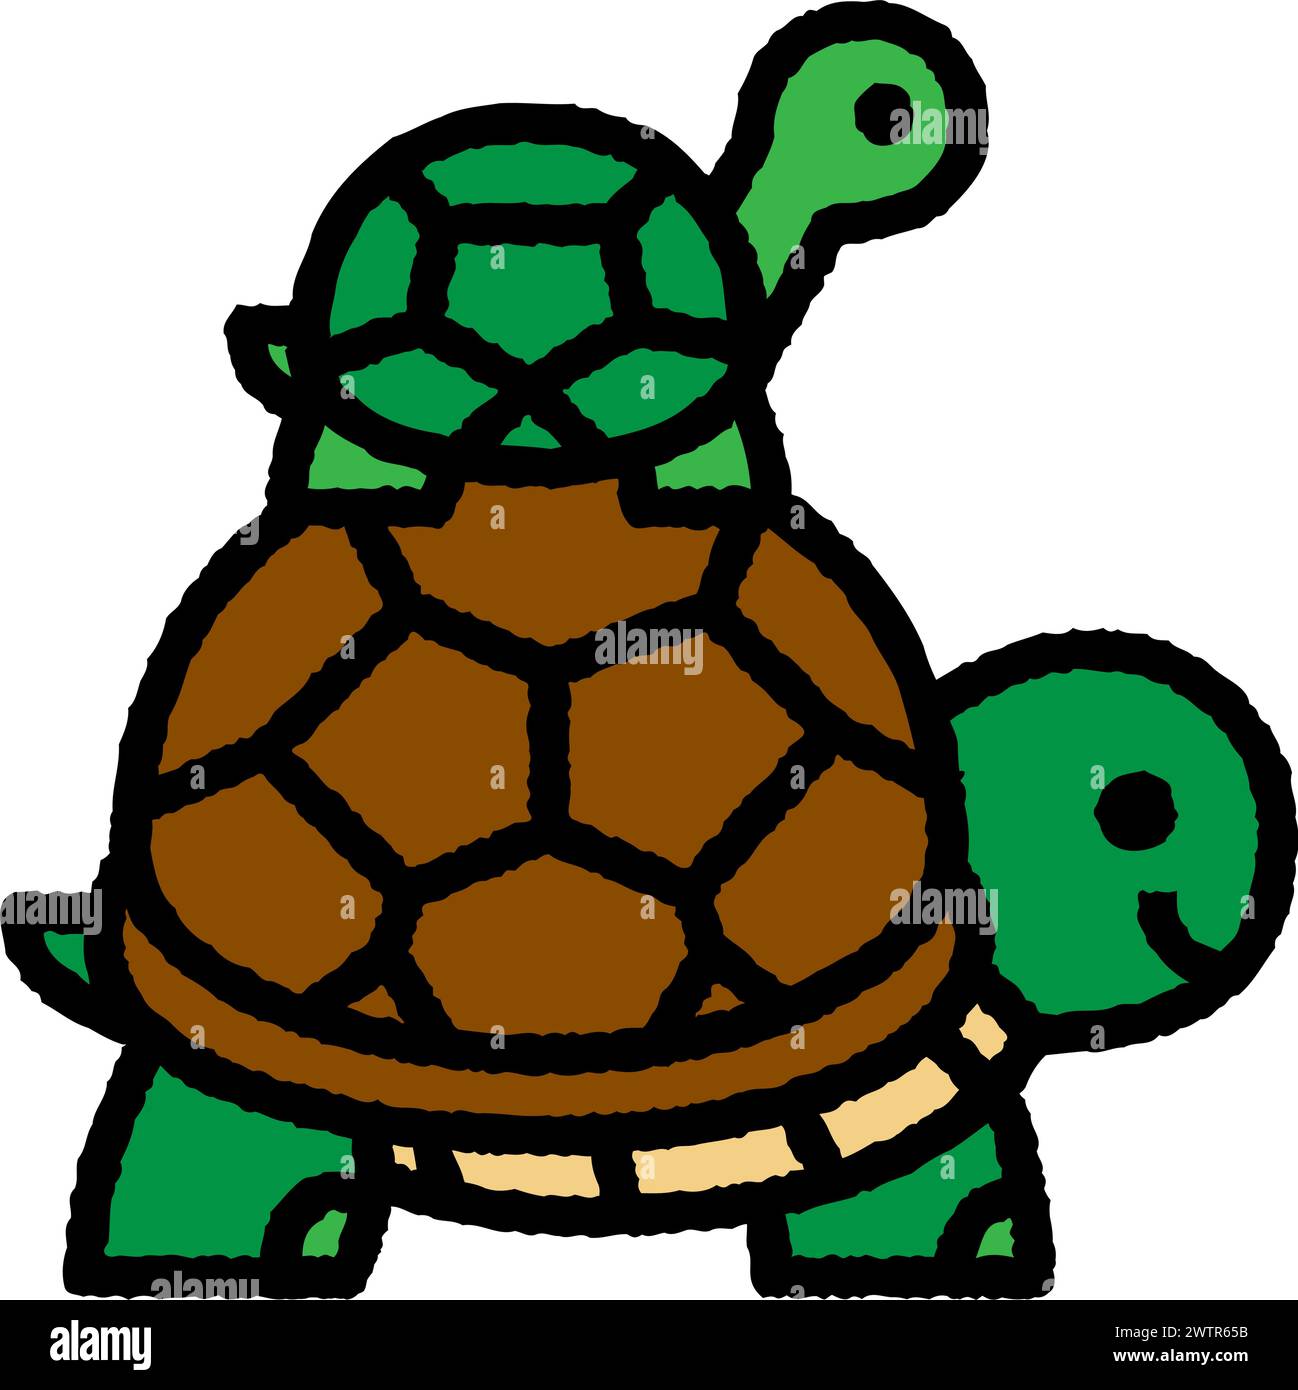 turtle family cartoon roughen filled outline icon for decoration, website, web, mobile app, printing, banner, logo, poster design, etc. Stock Vector